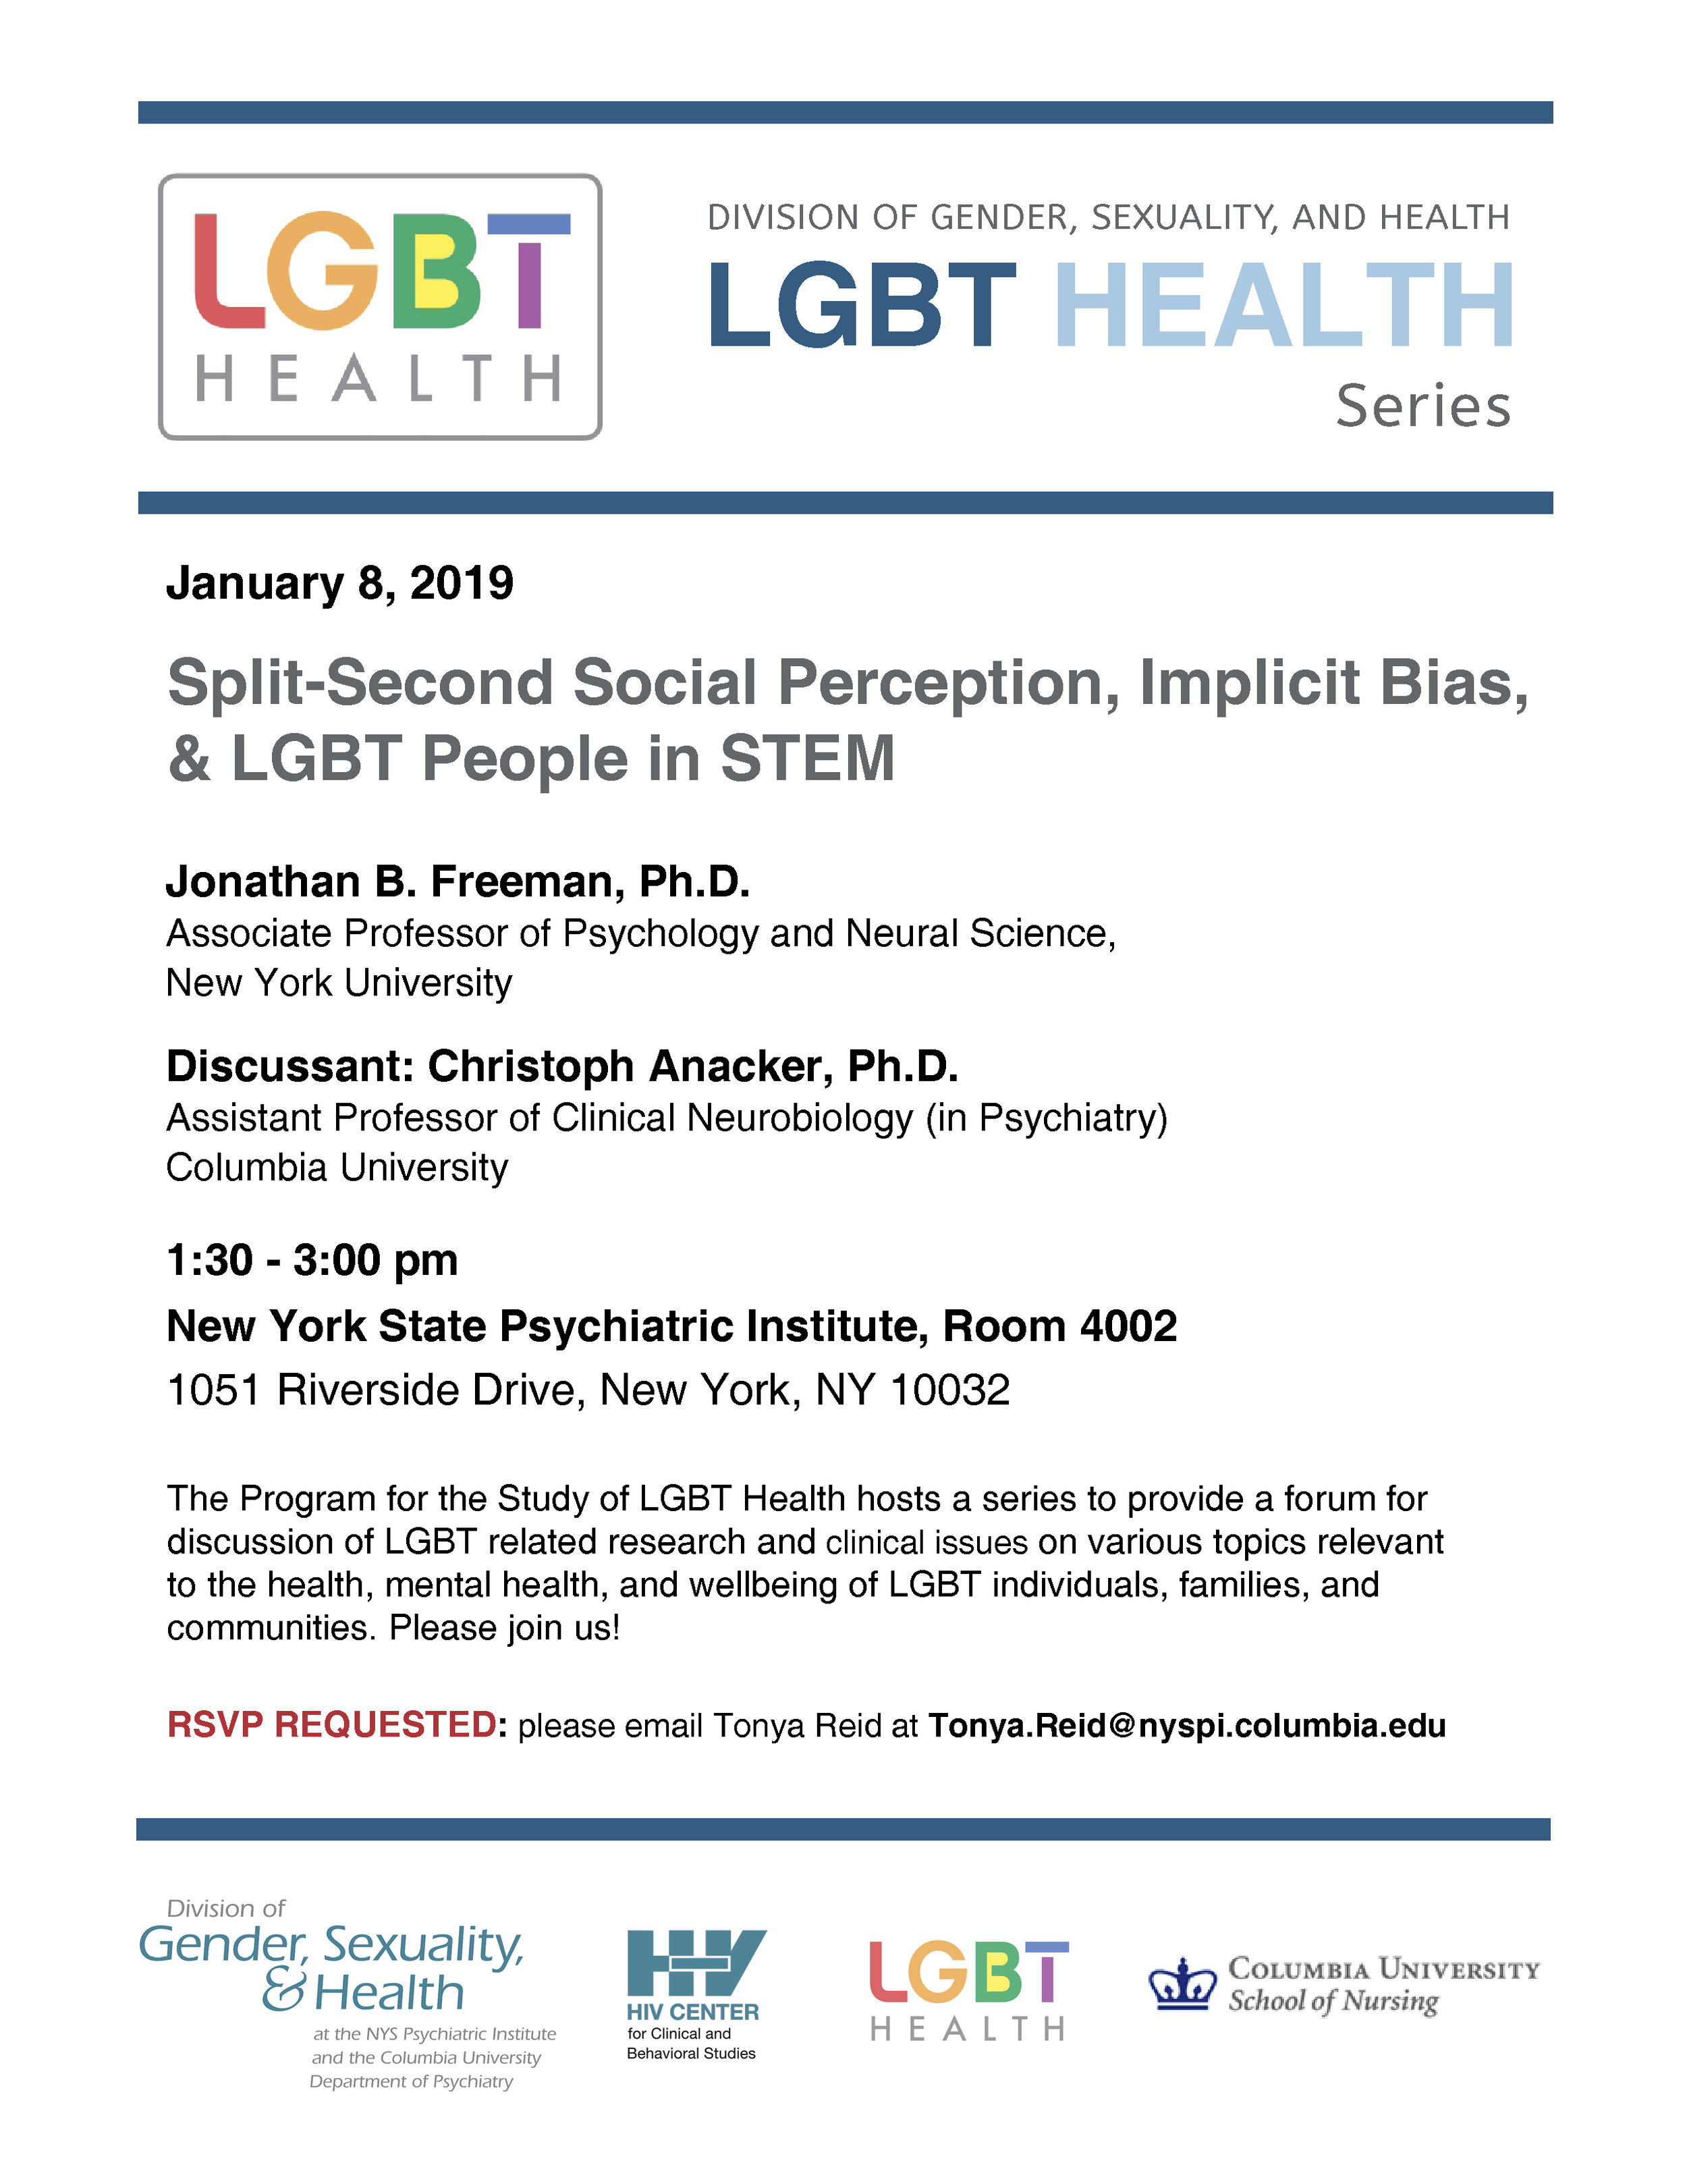 LGBT Health Series Jan 8 2019.jpg